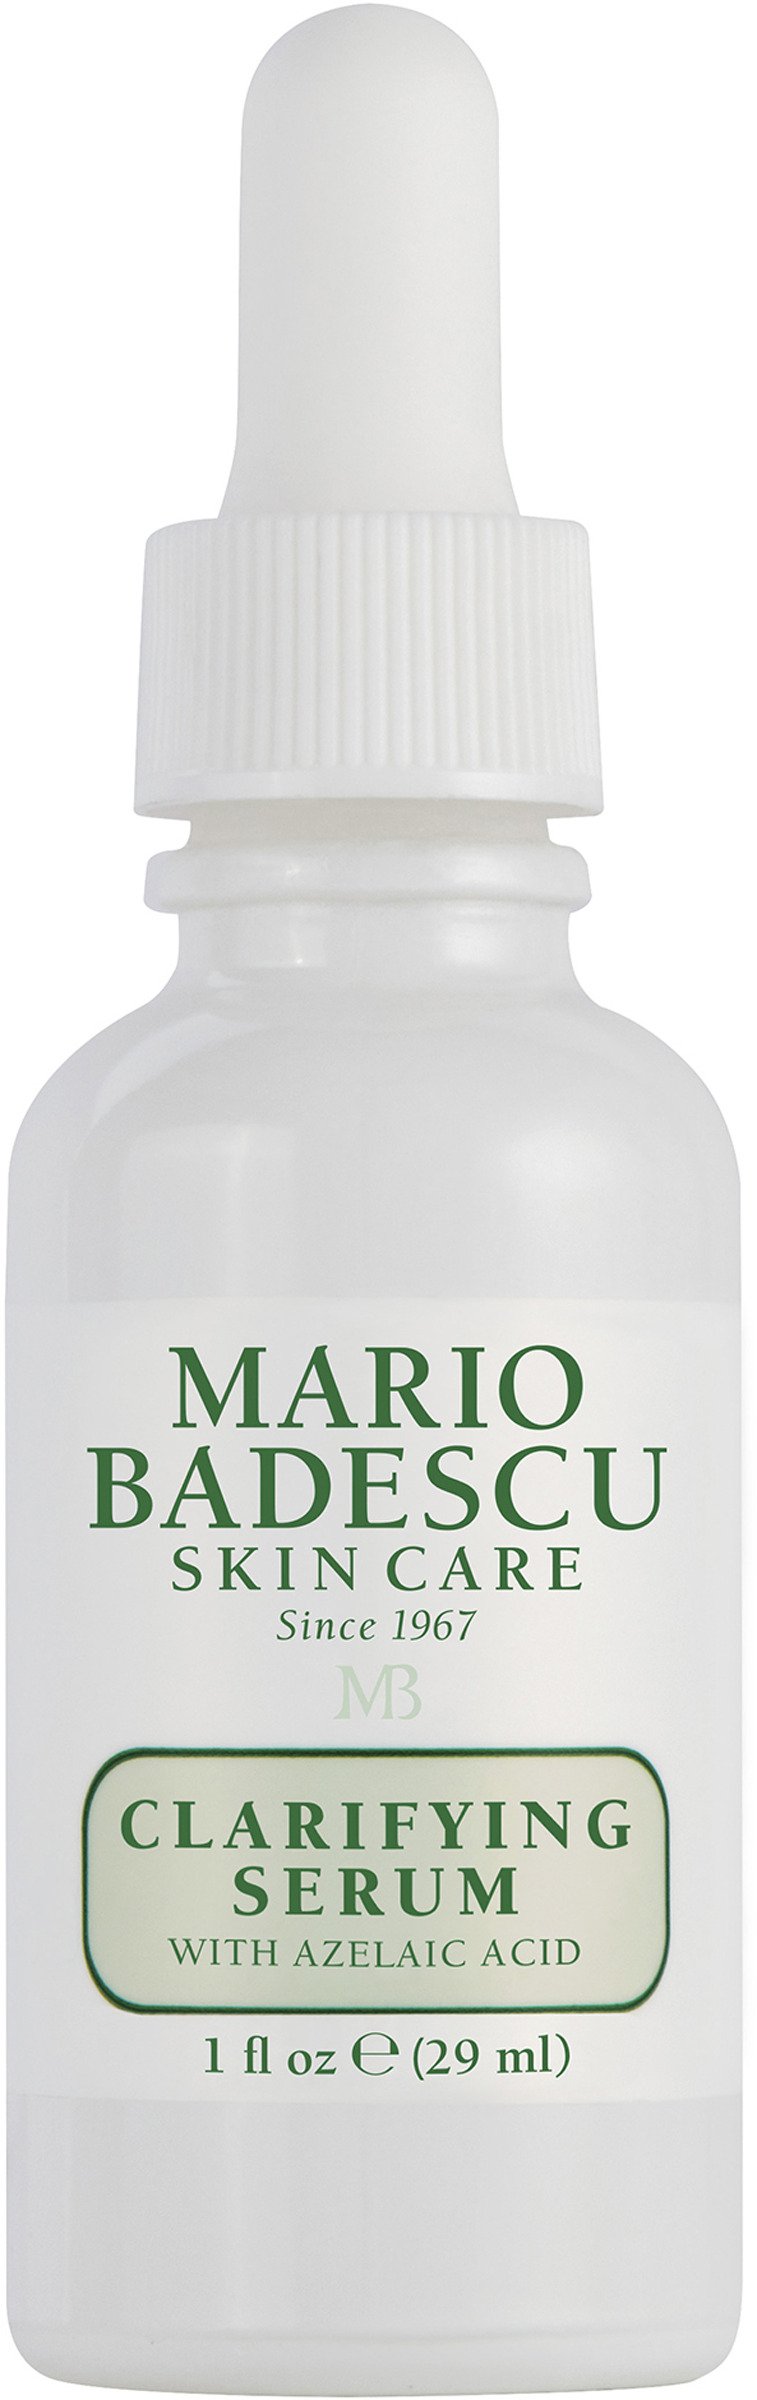 MARIO BADESCU Clarifying Serum 29 ml